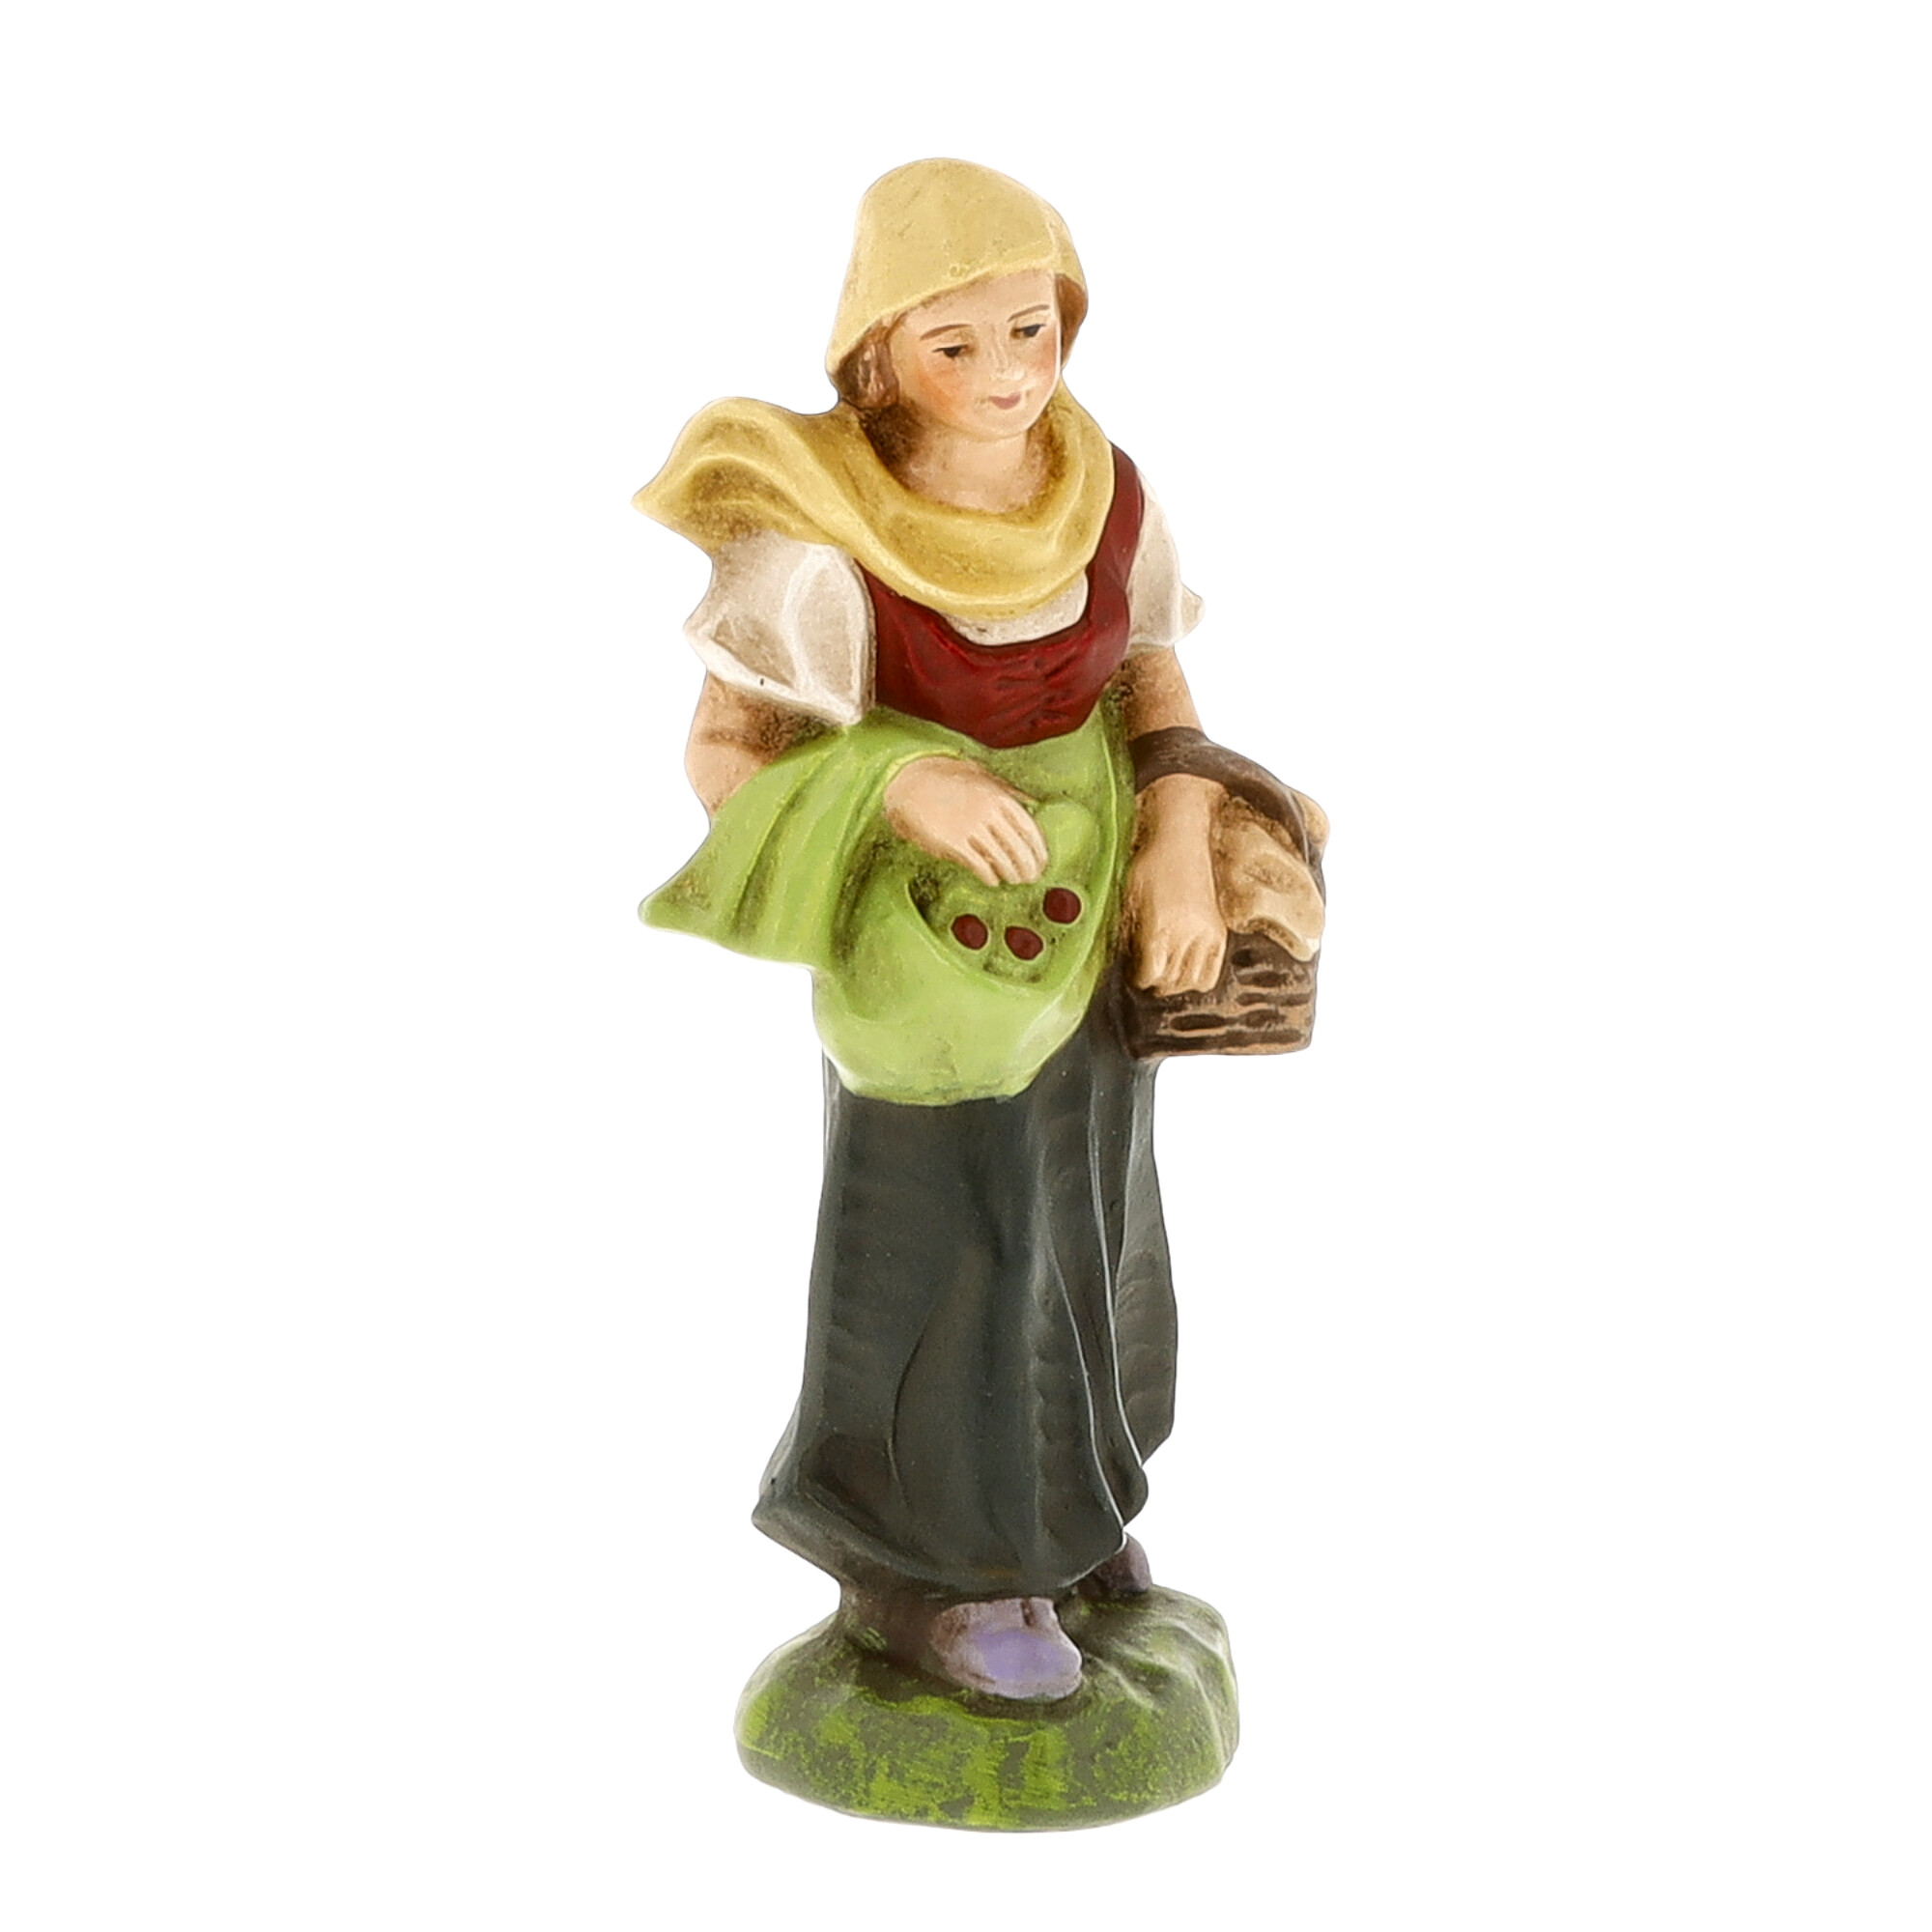 Shepherdess with fruit basekt - MAROLIN Nativity figure